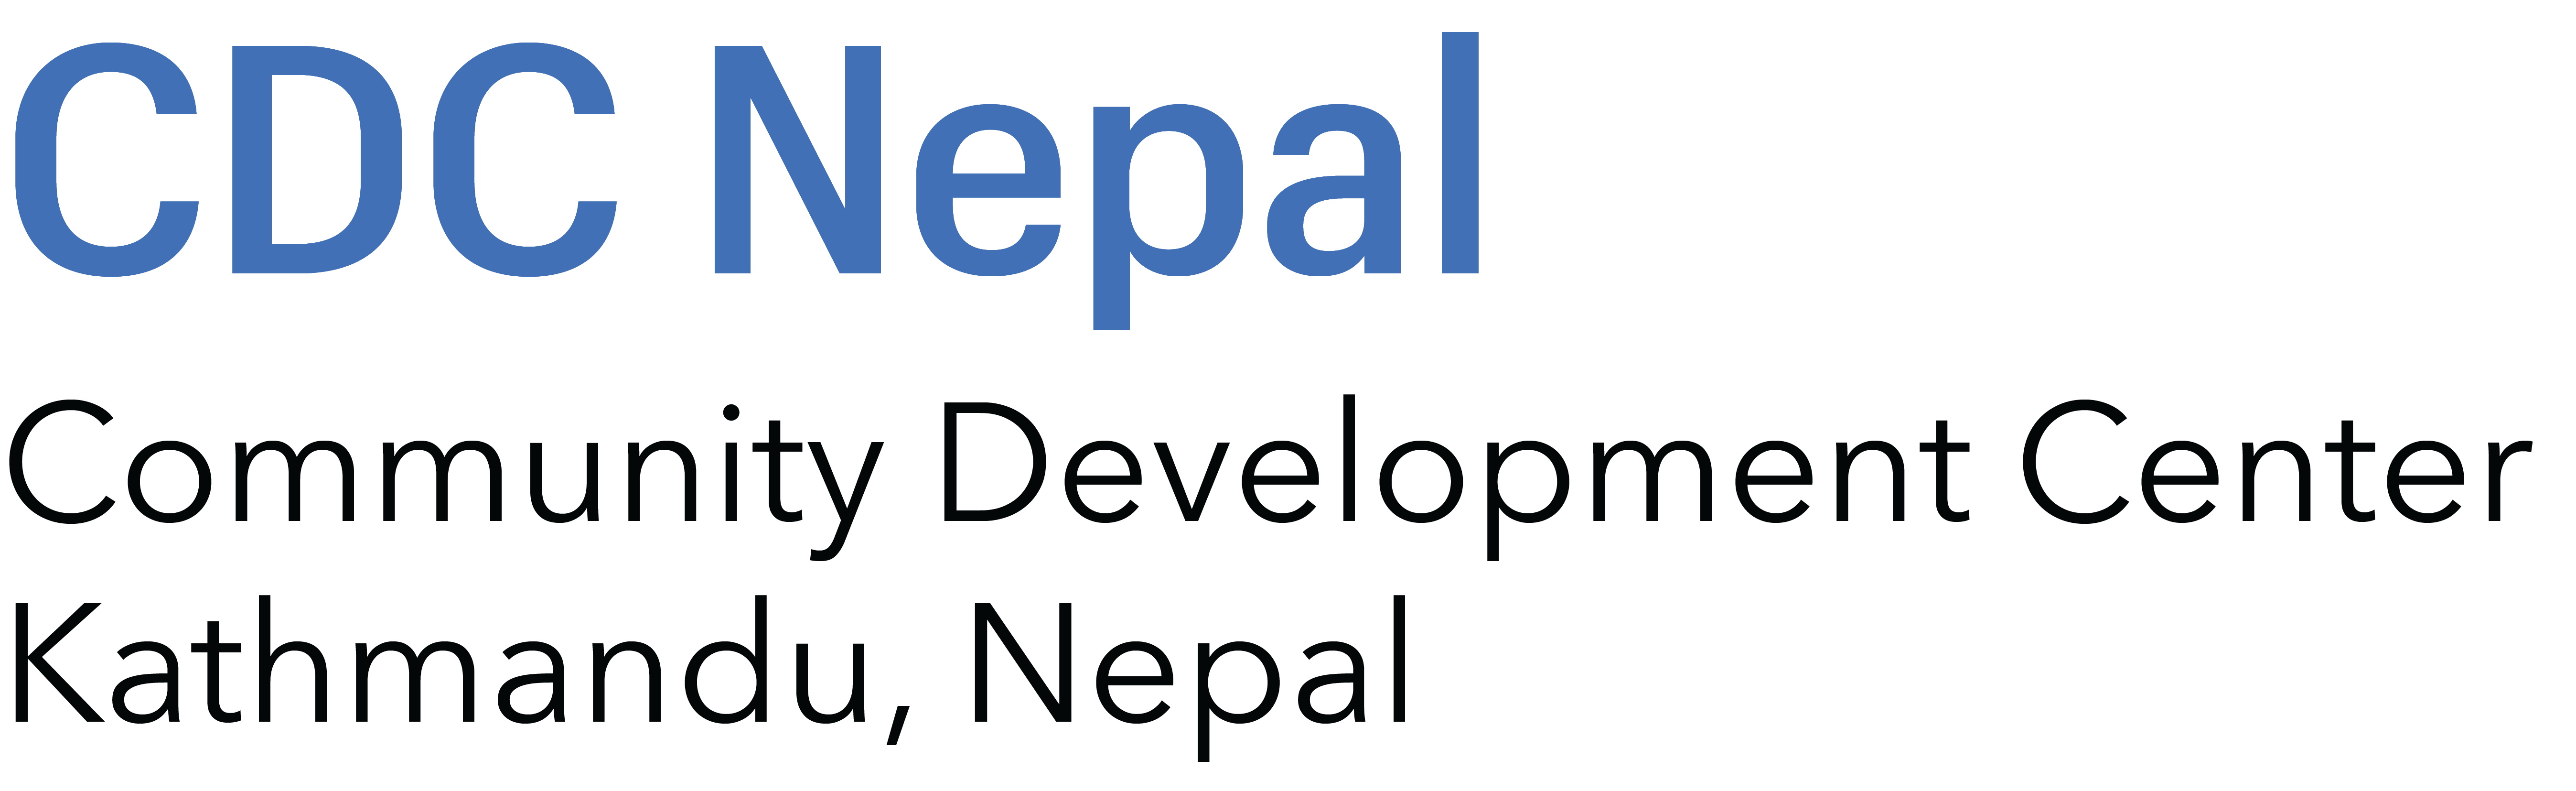 CDC Nepal